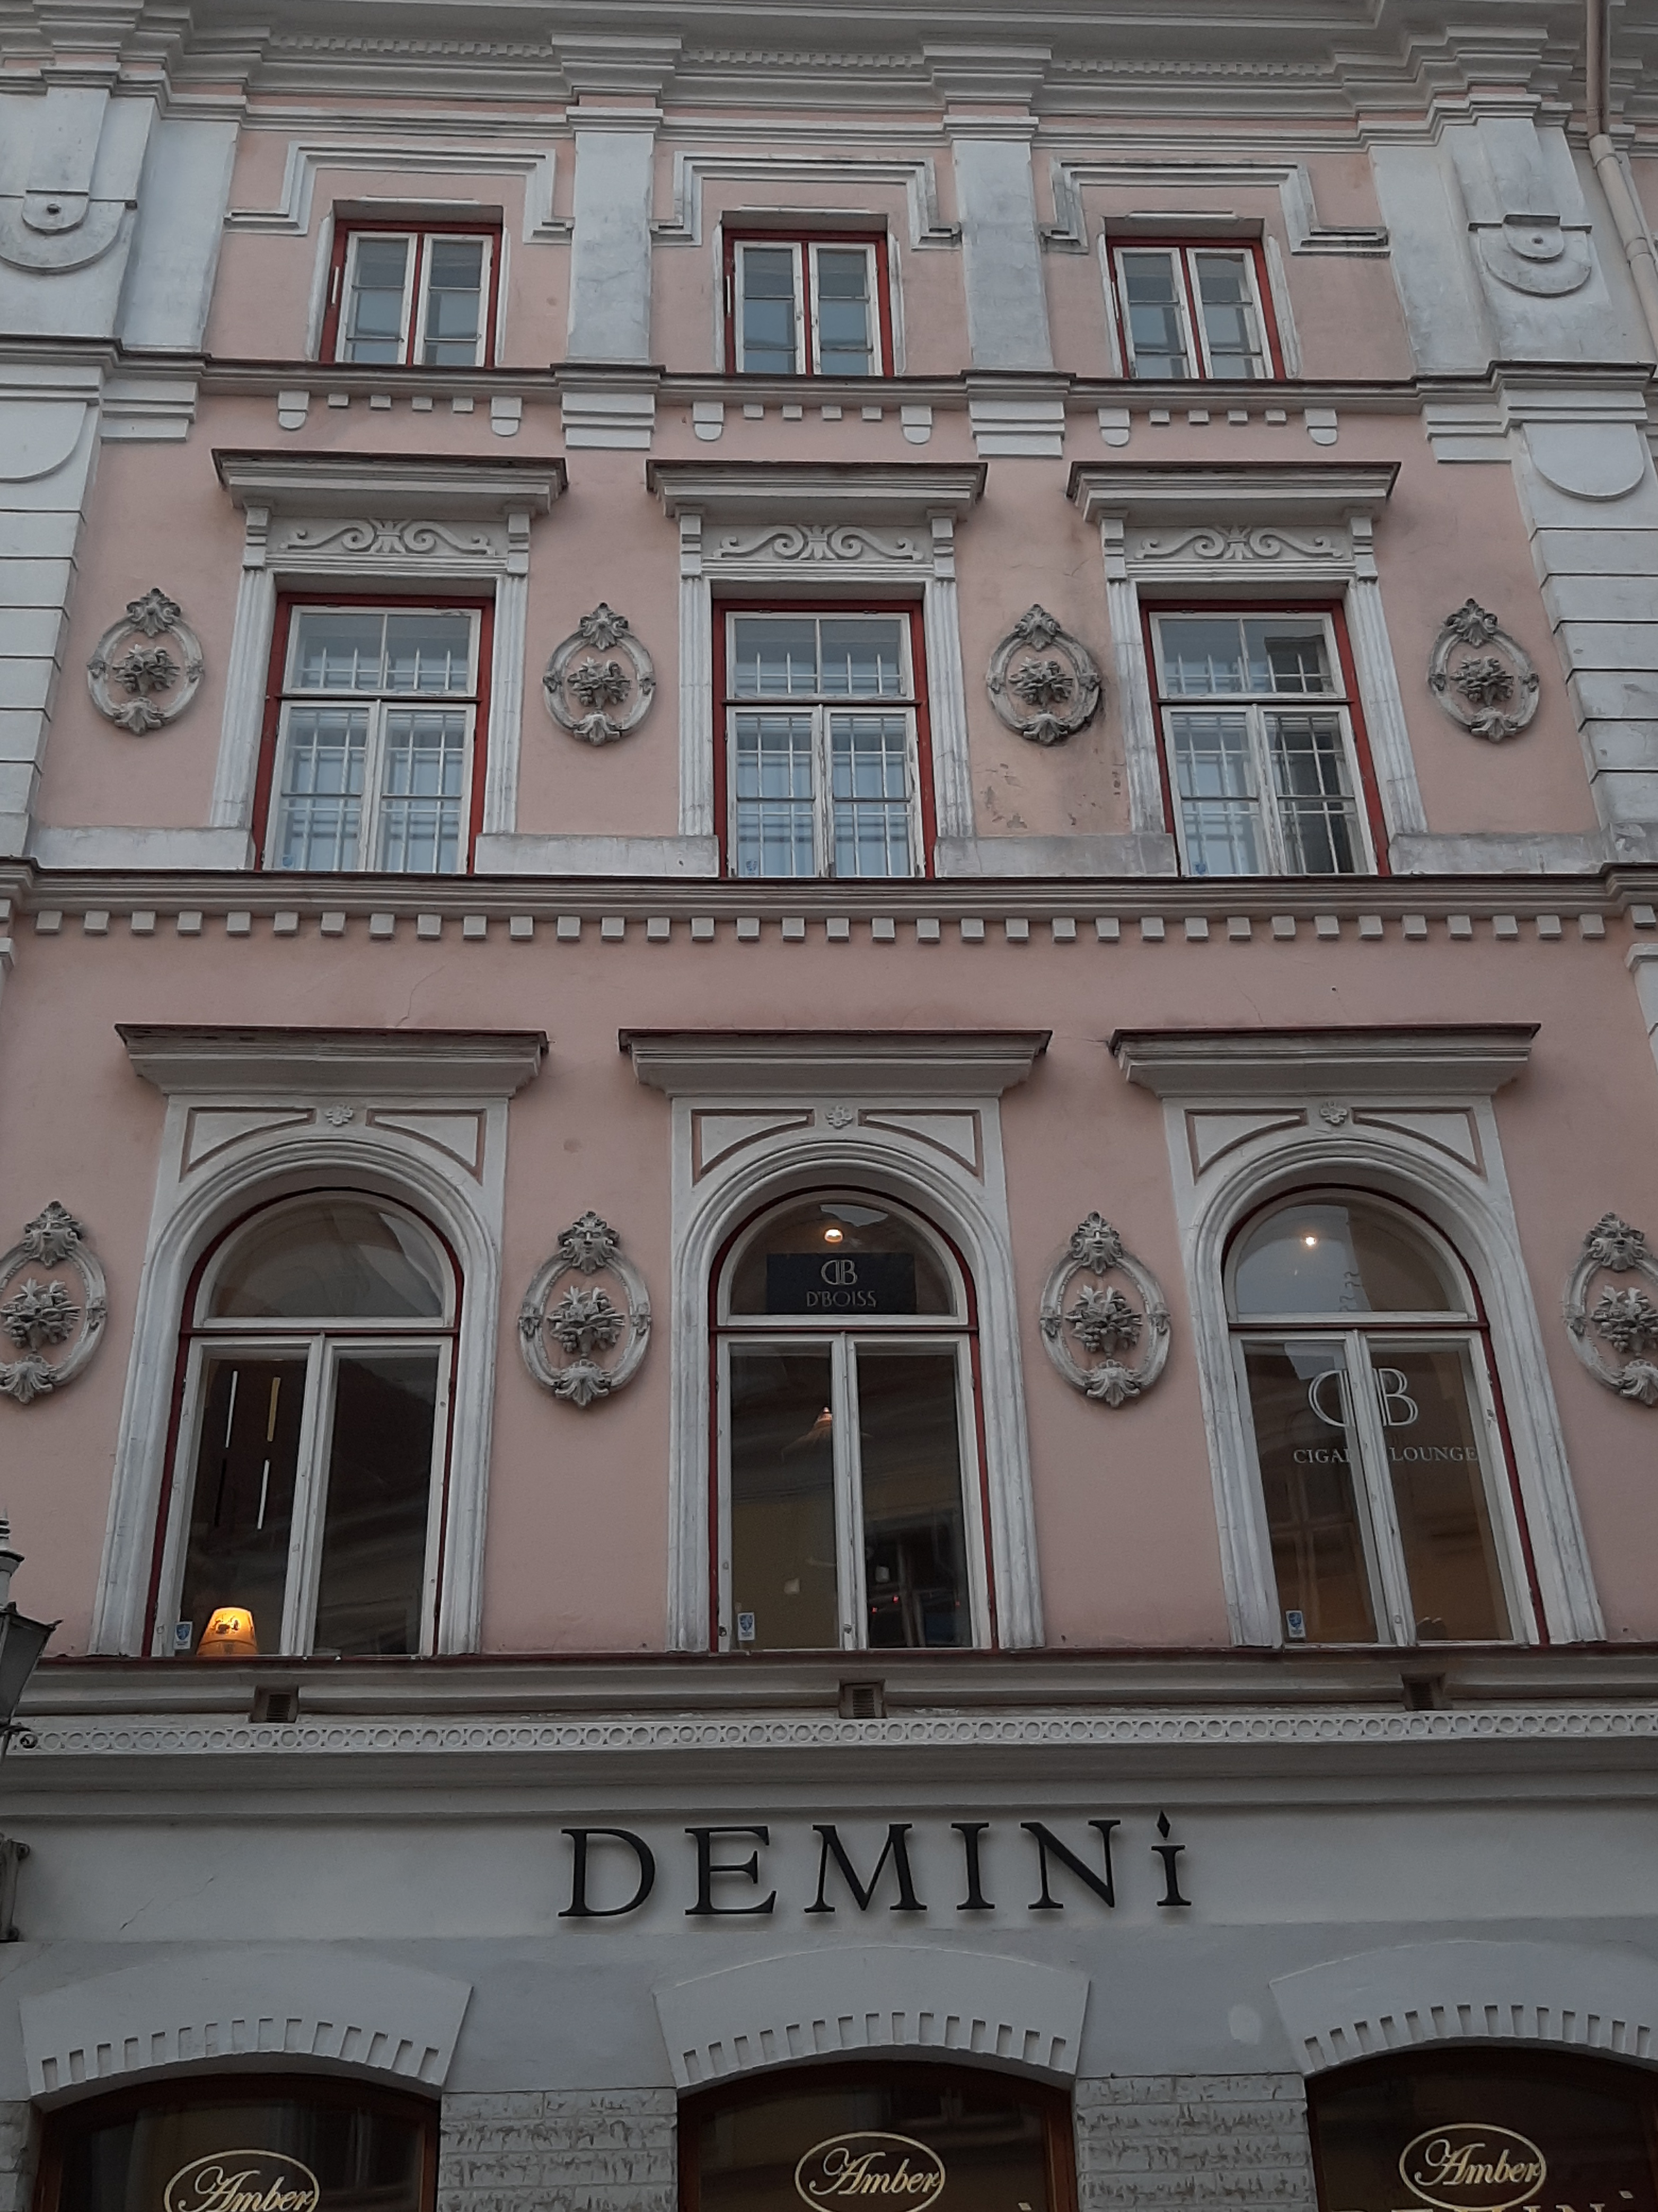 Demini store? Viru Street in Tallinn rephoto